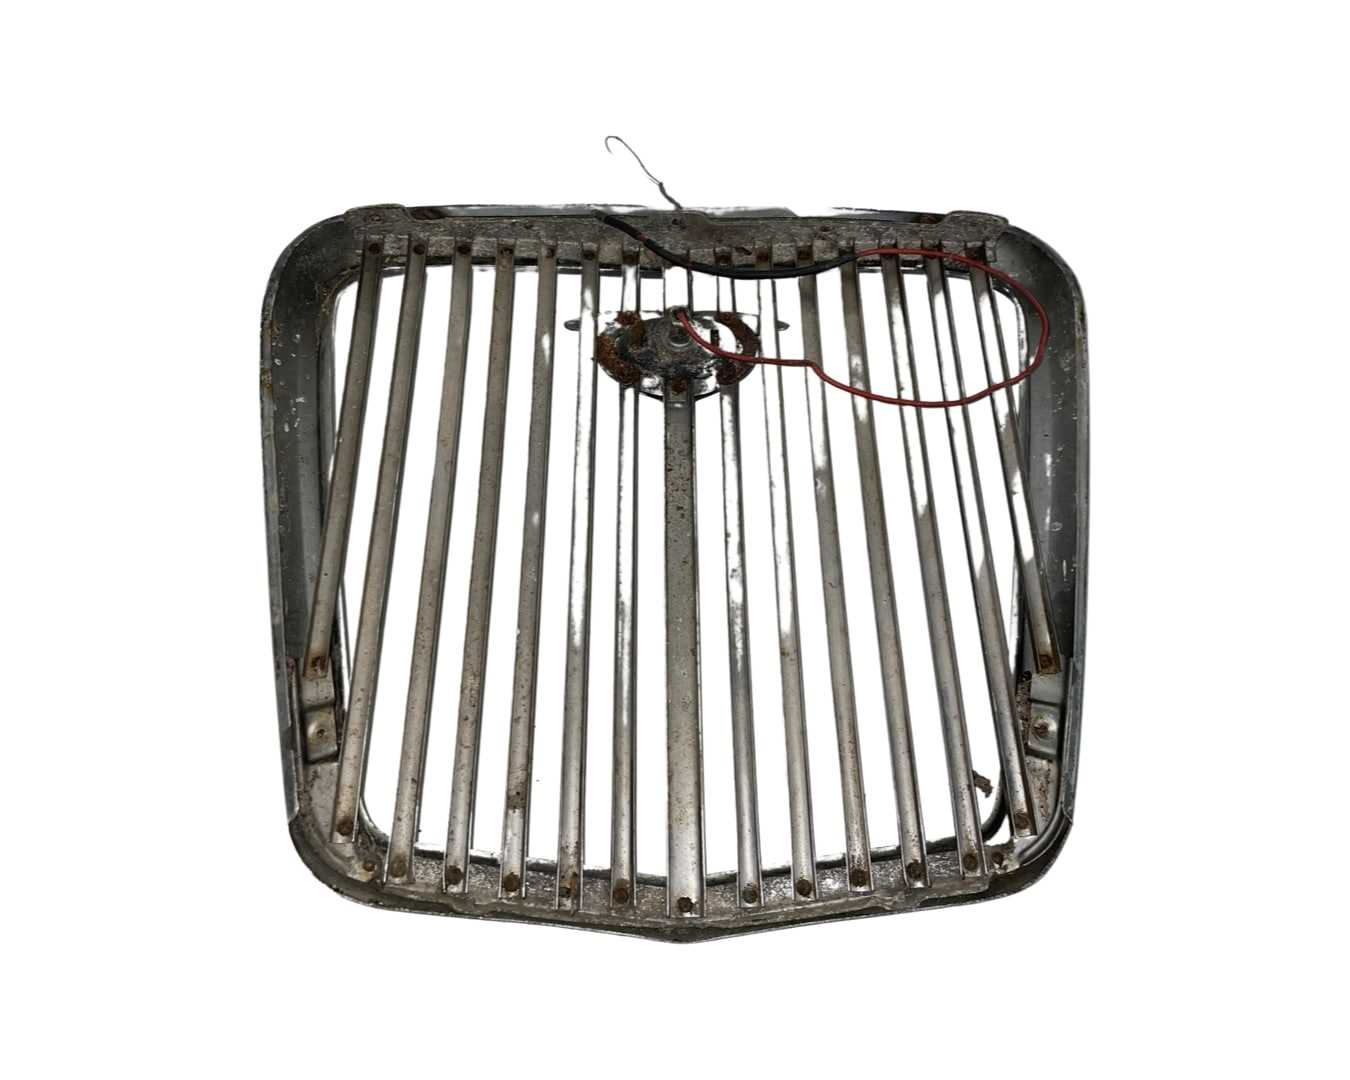 Wolsley radiator grill - Image 2 of 3